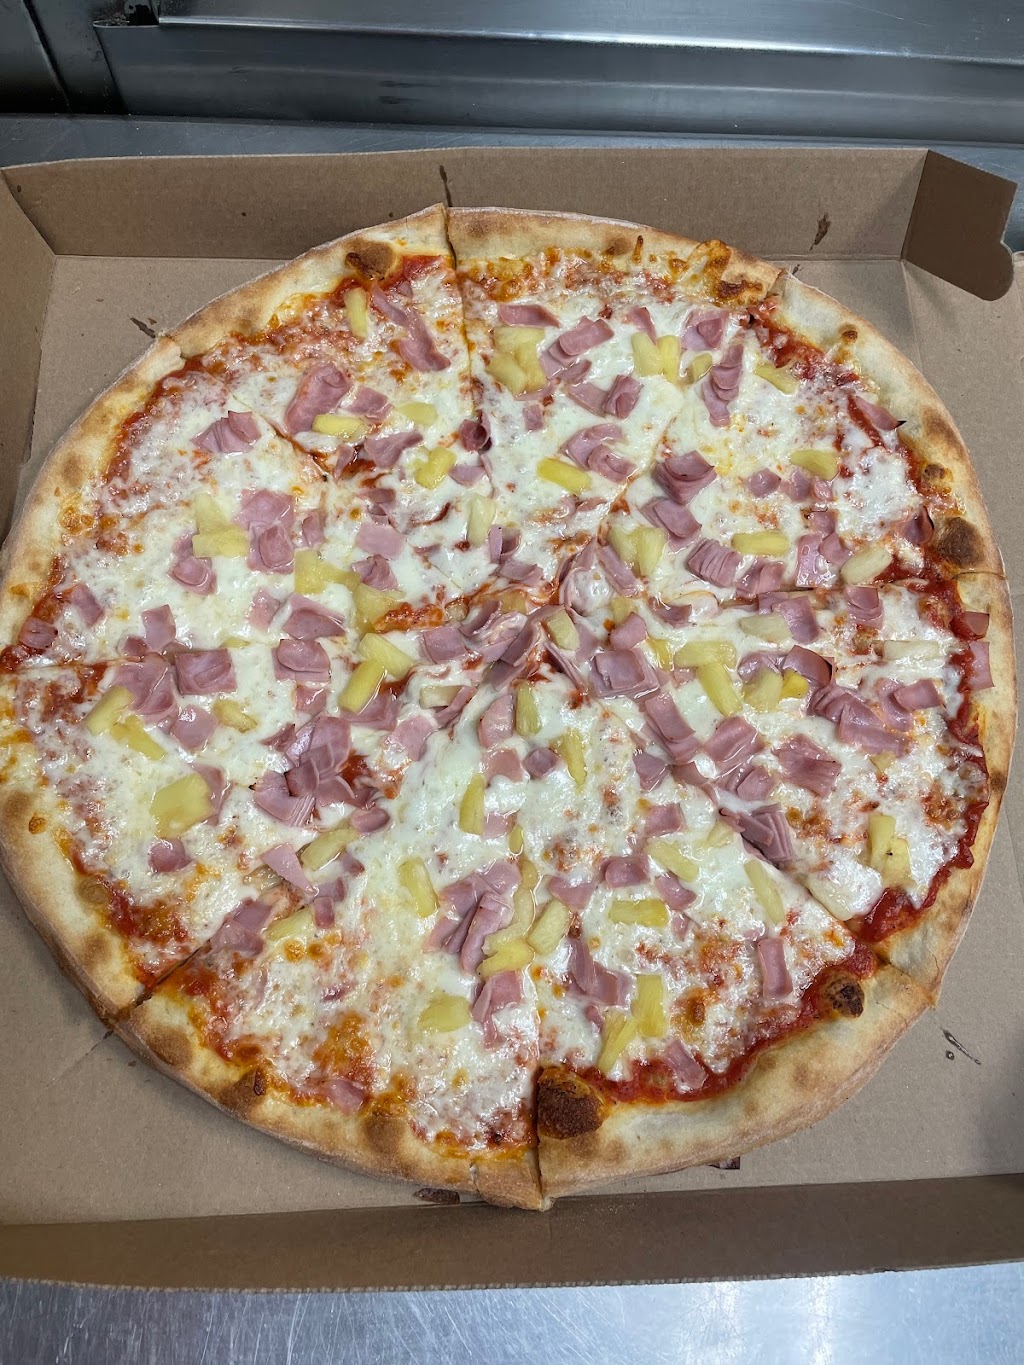 Primo Pizza & Subs | 148 W St Joseph St, Easton, PA 18042 | Phone: (610) 438-0051